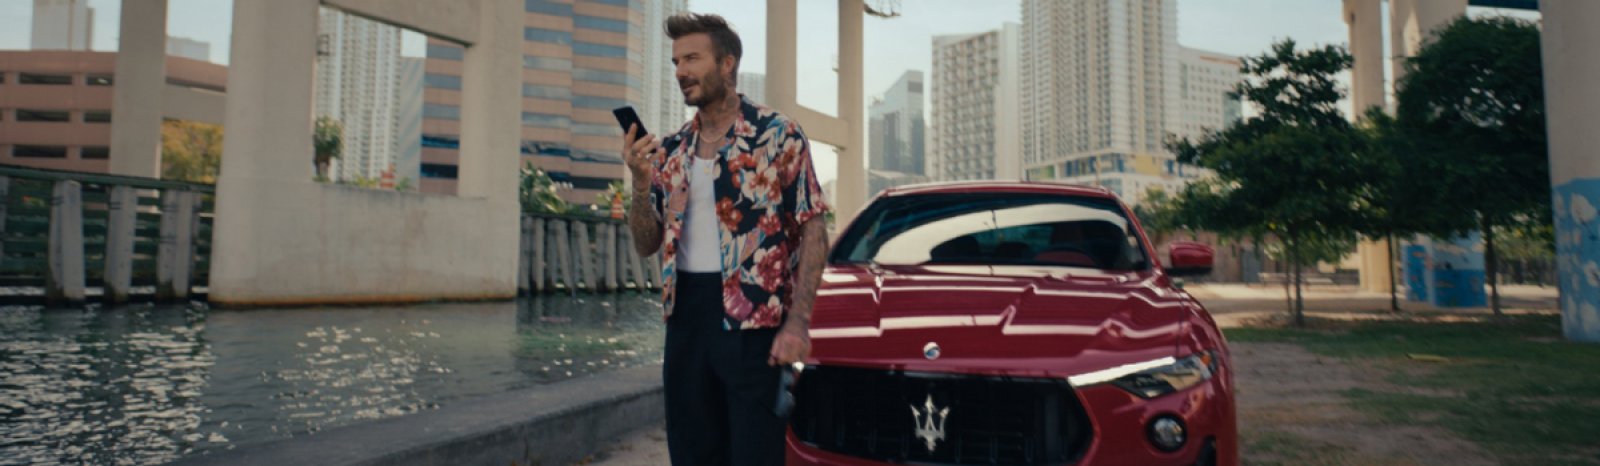 Maserati und David Beckham